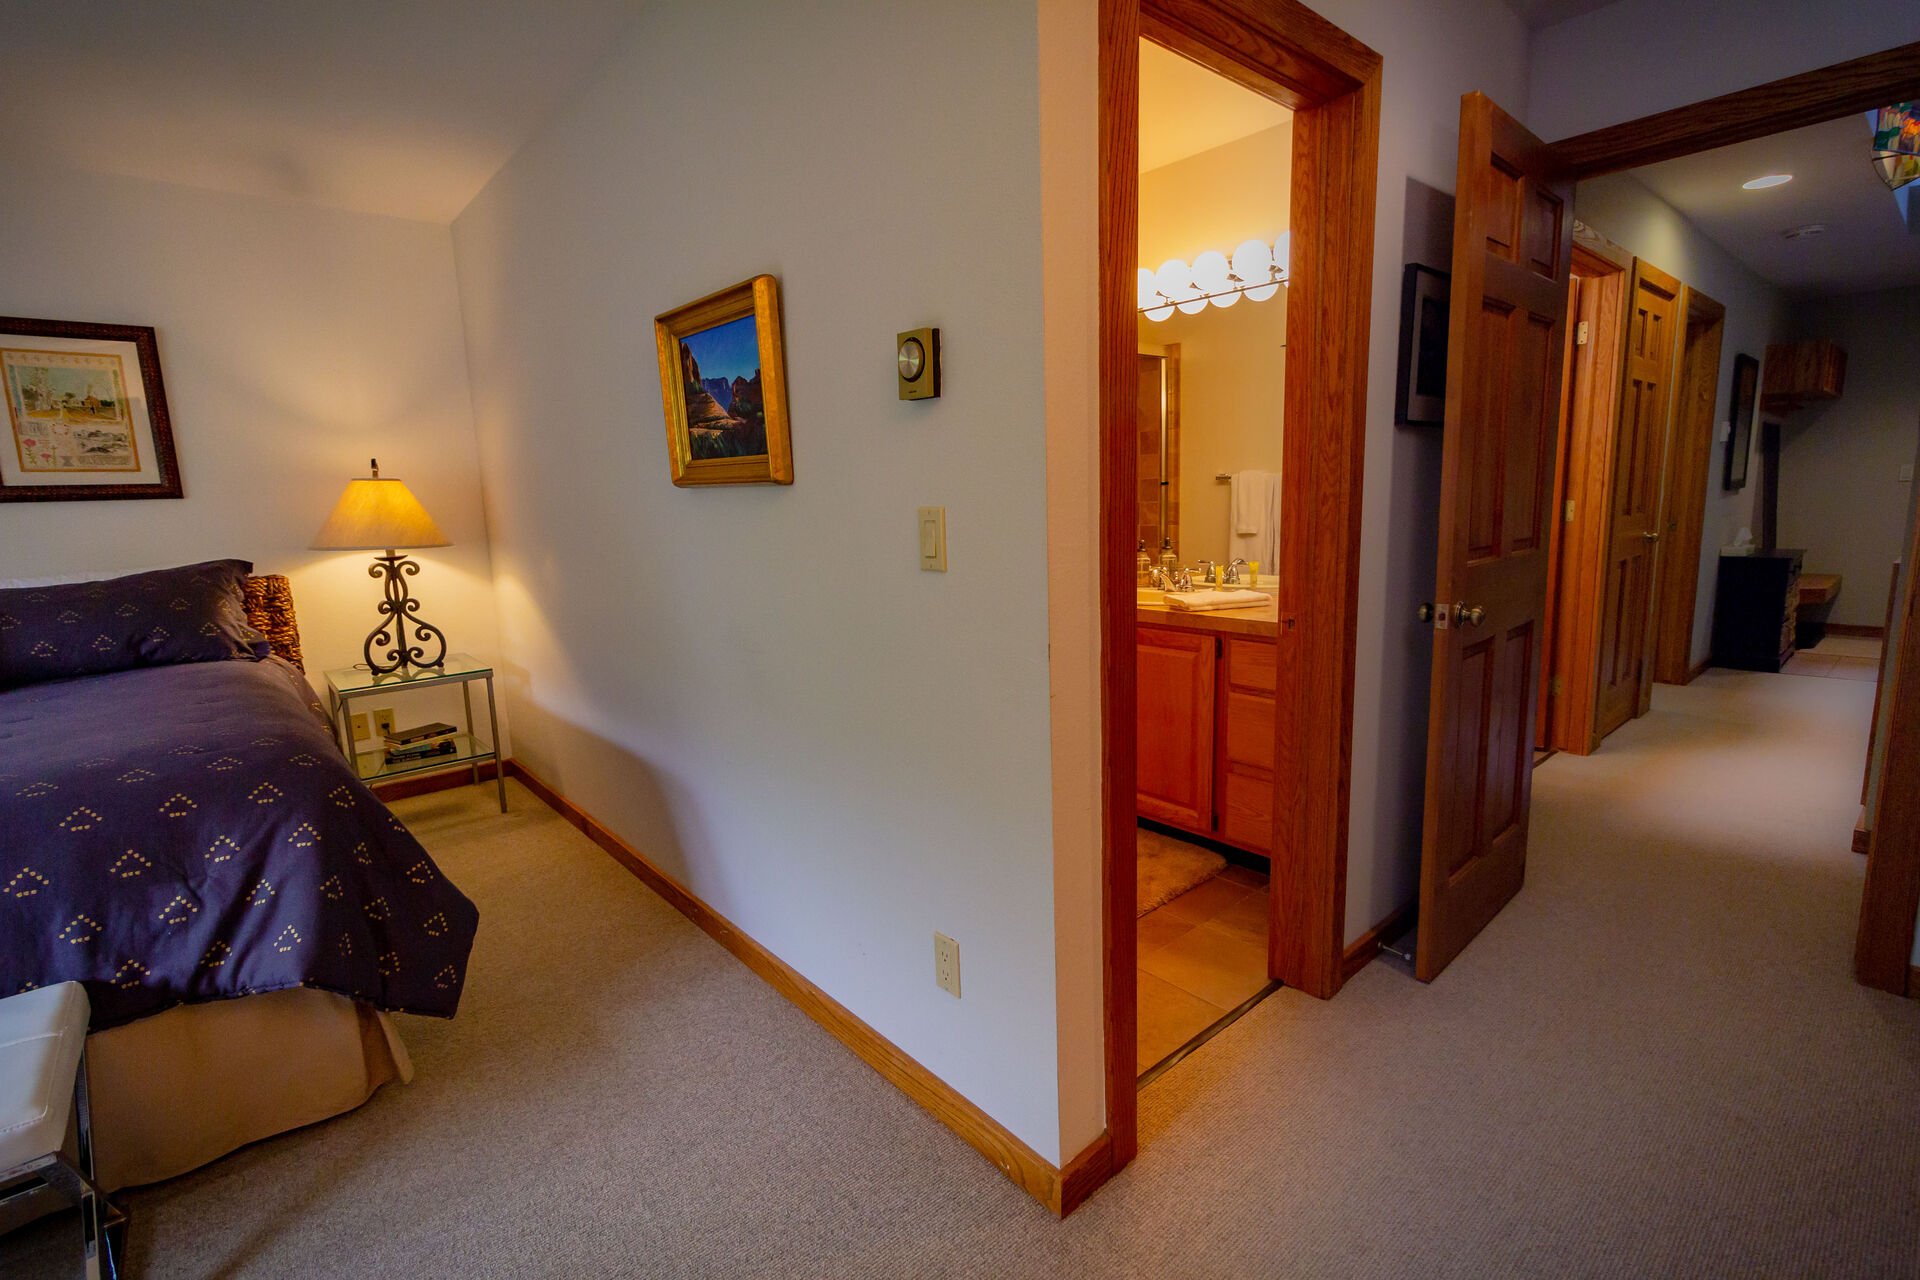 En-Suite Bathroom and Hallway from Bedroom to other Rooms